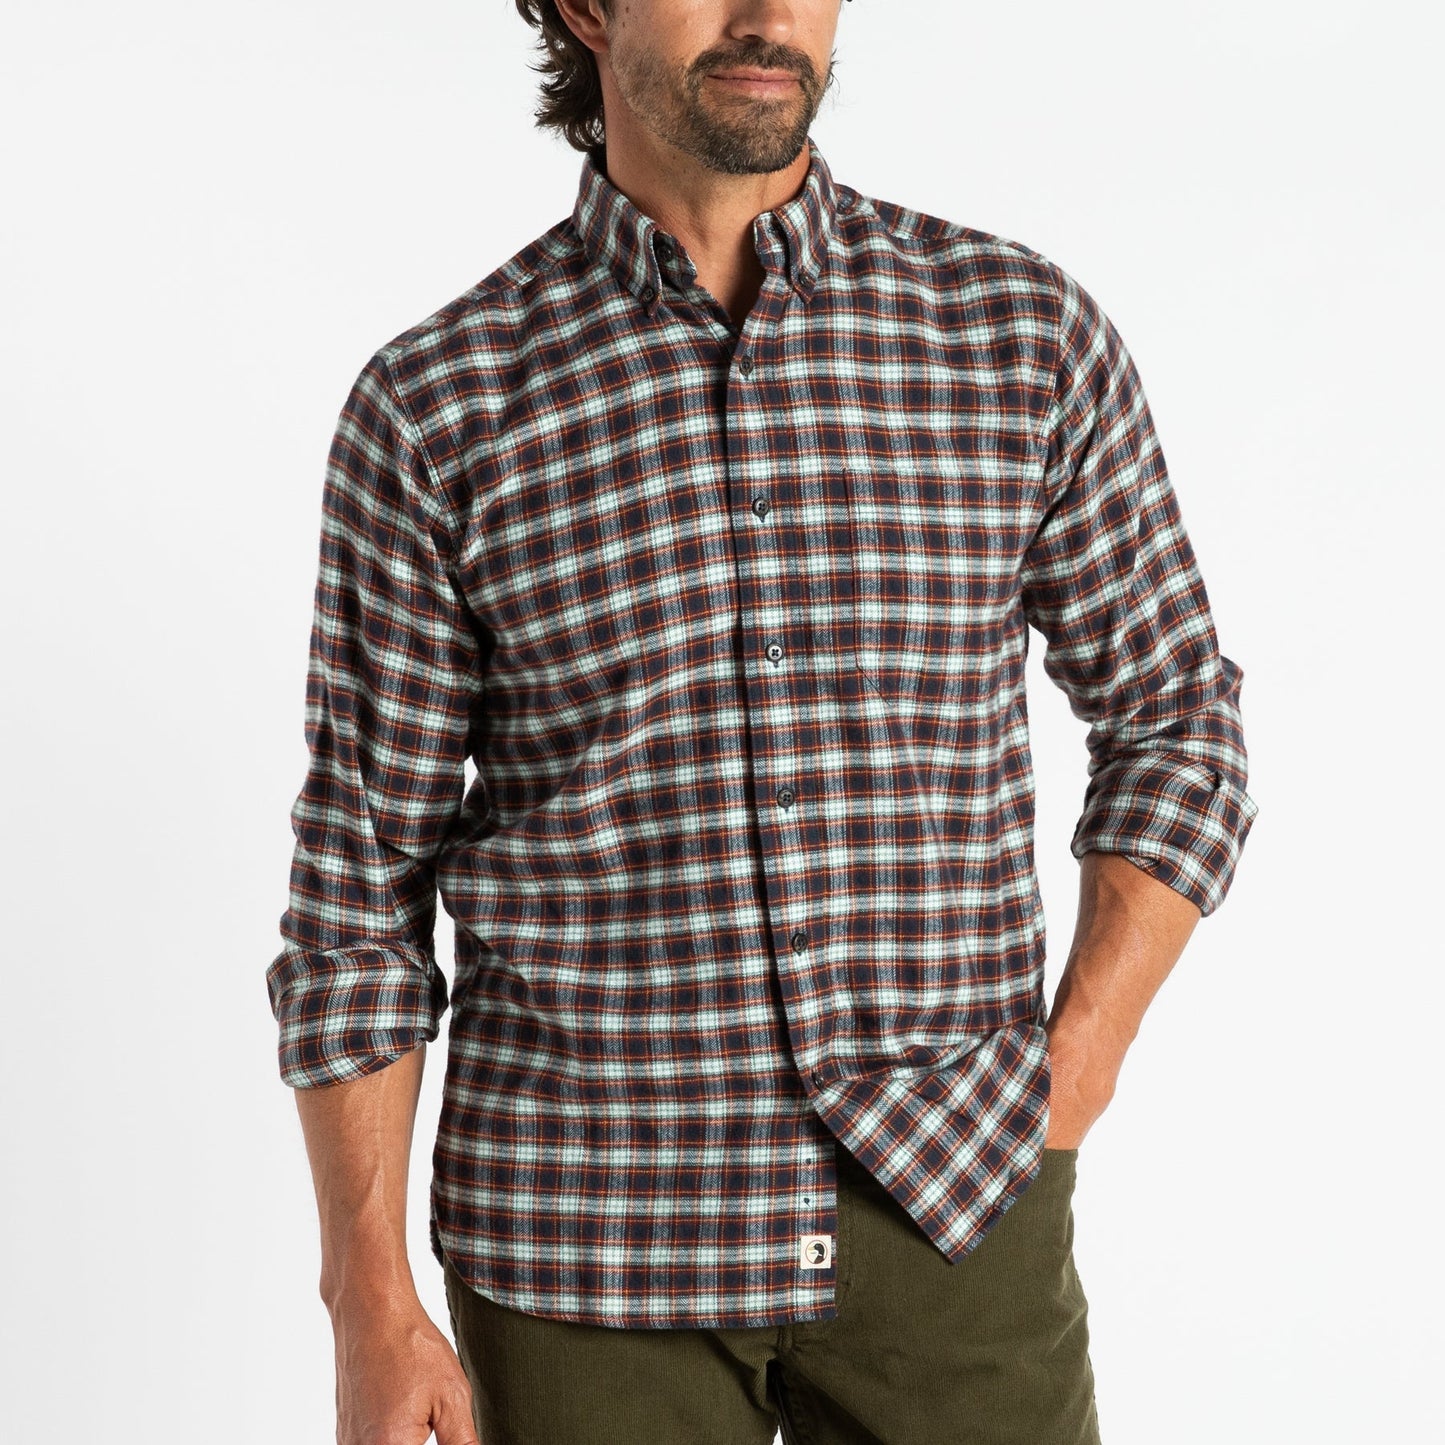 Rosemont Plaid Woven Flannel Shirt | Duck Head - Apparel